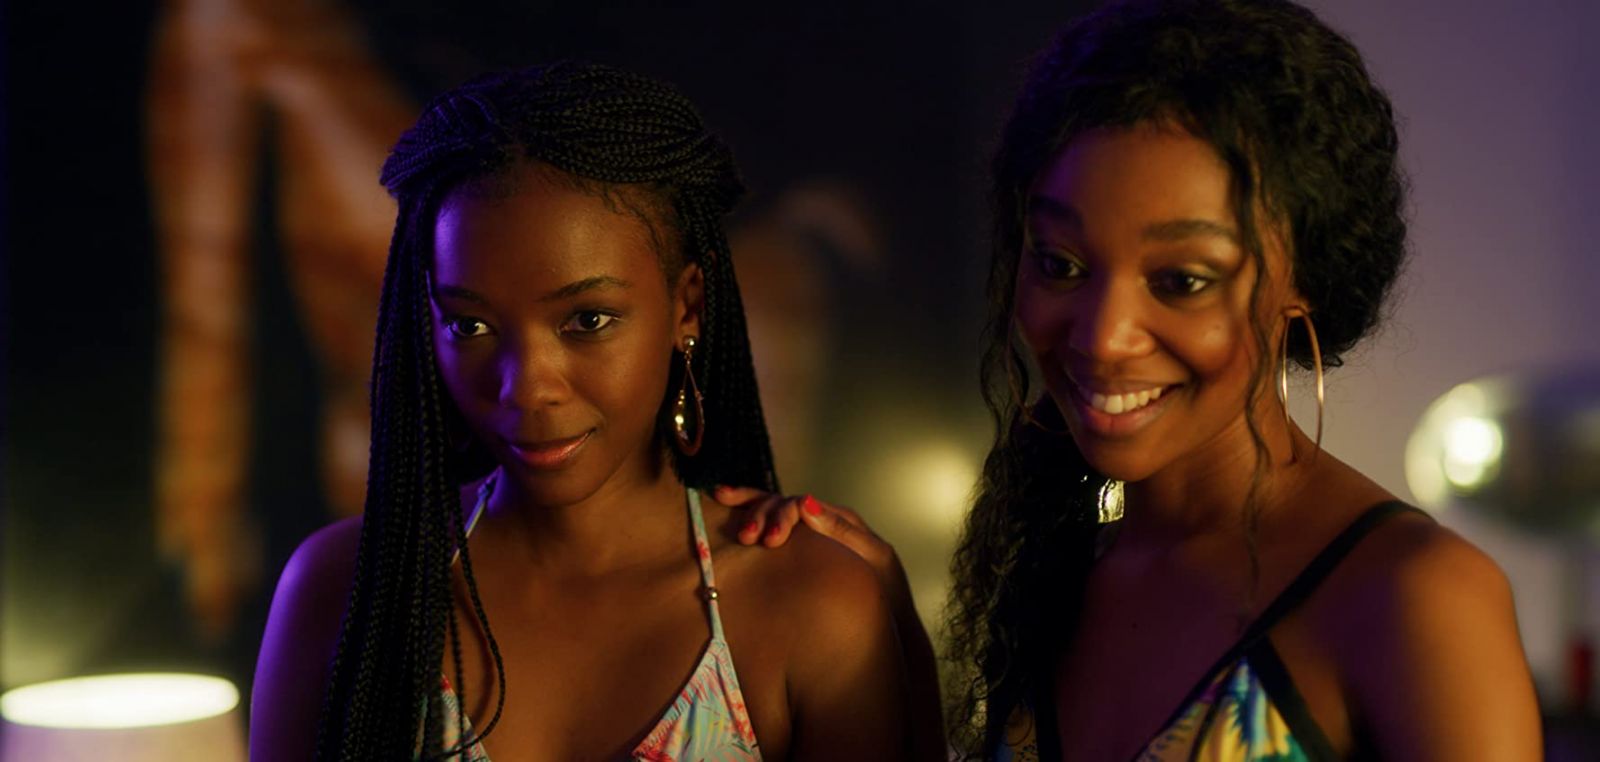 Puleng (Ama Qamata) e Fikile (Khosi Ngema) na serie da Netflix Sangue e Água.